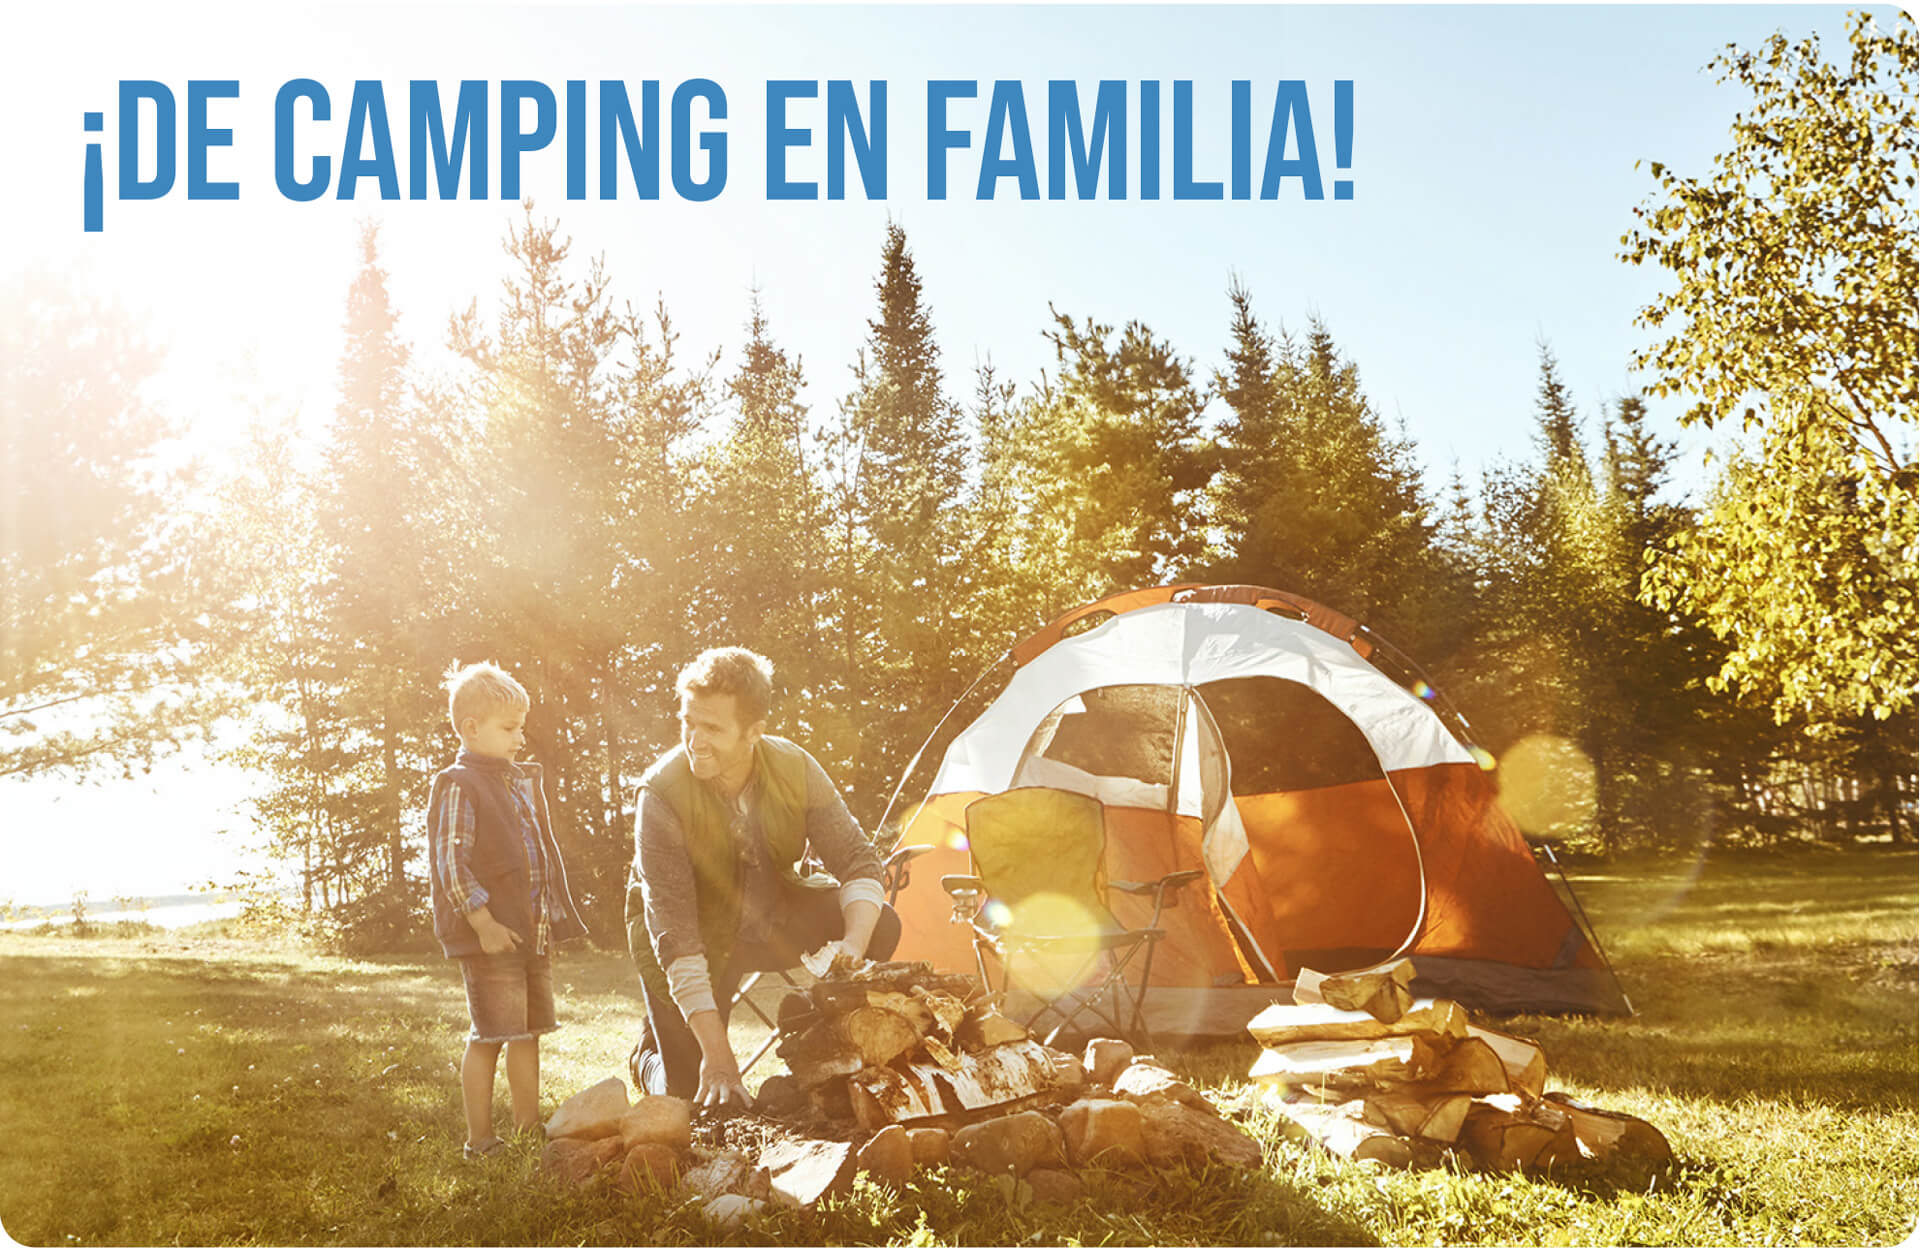 Camping en familia